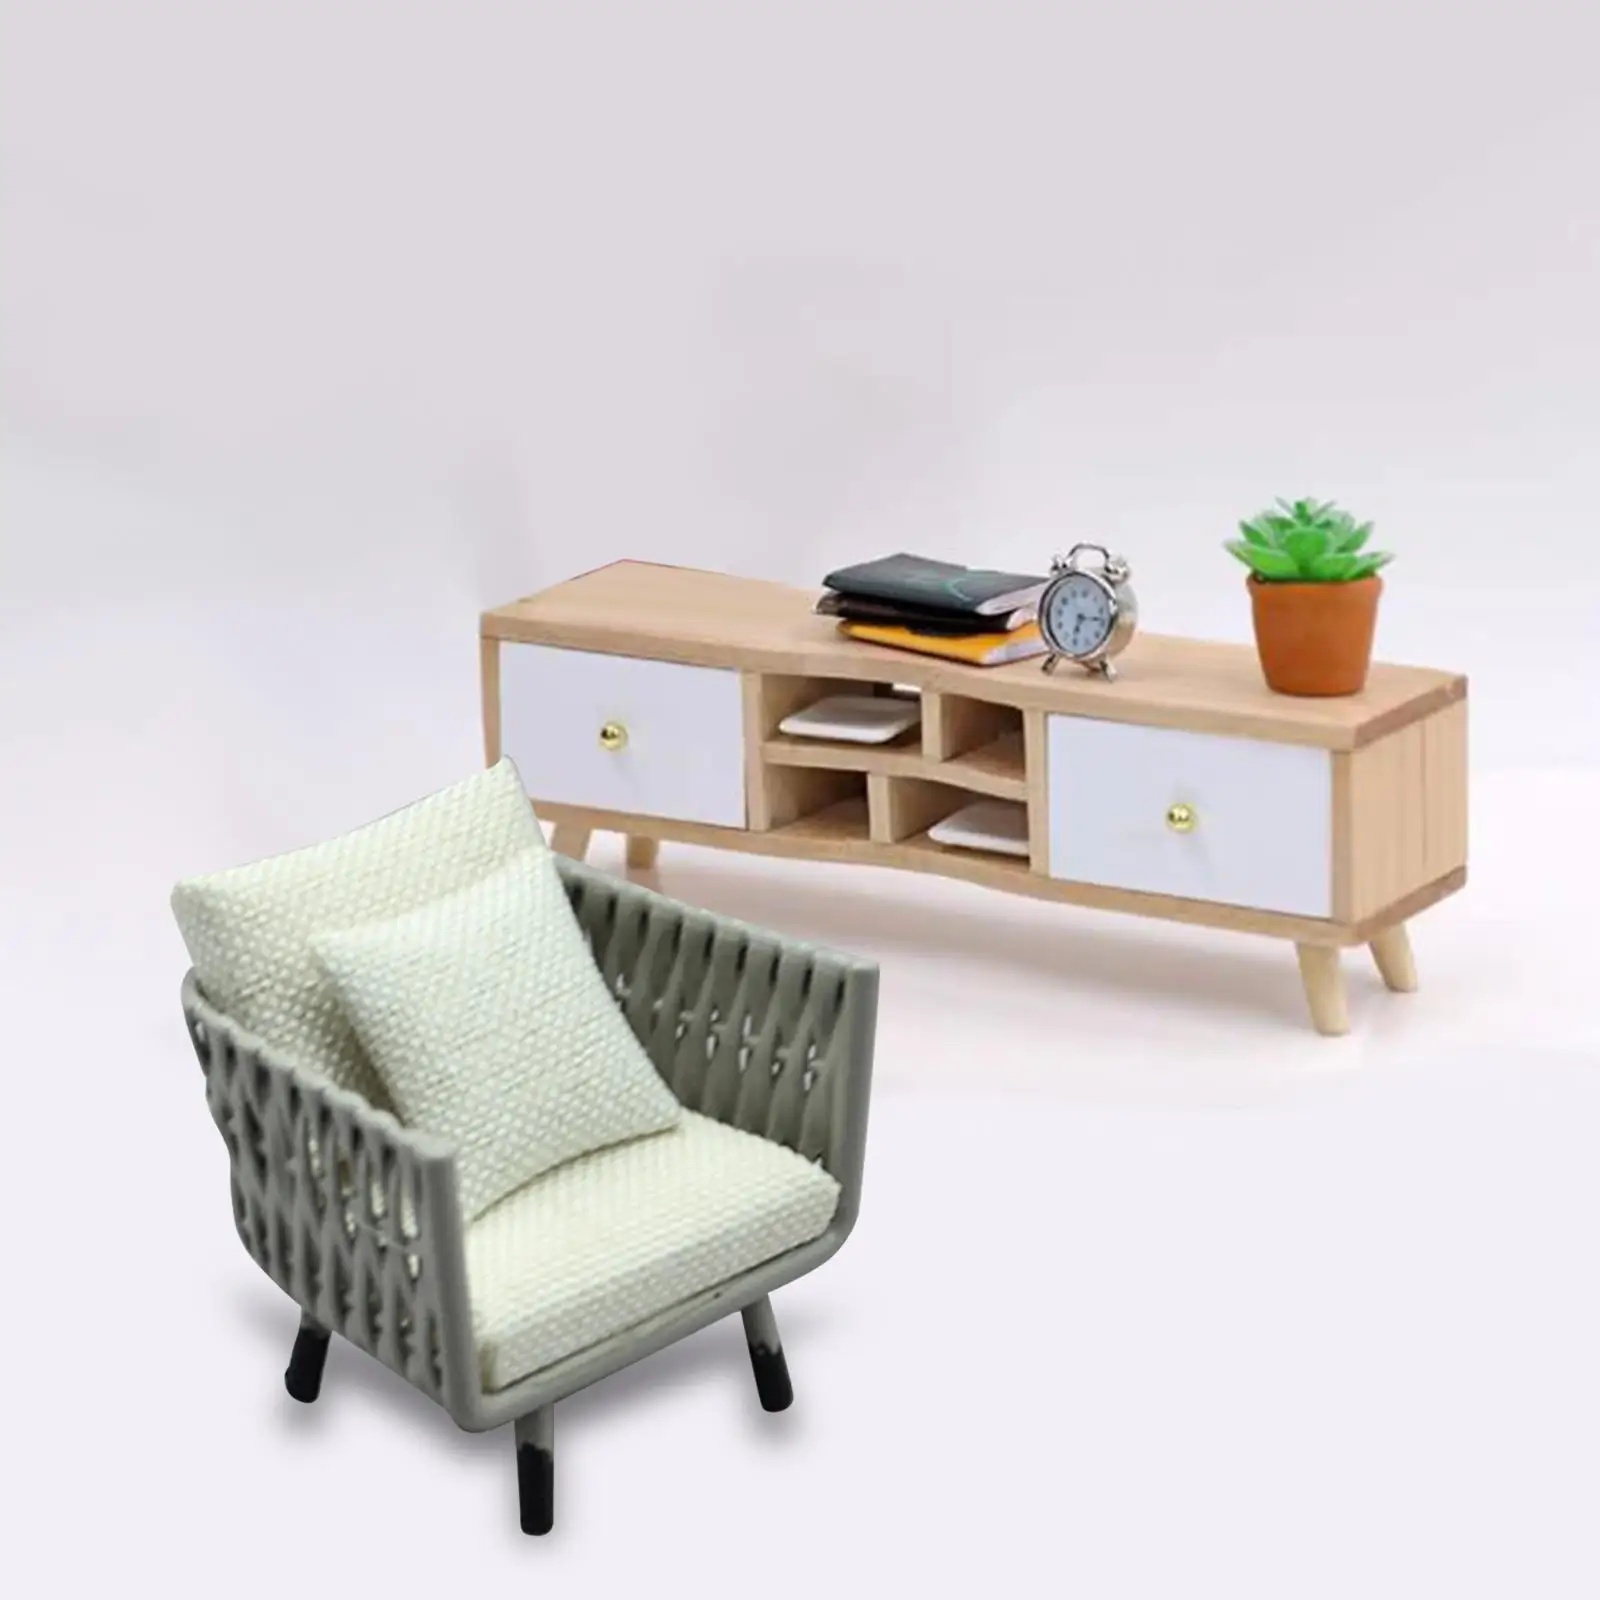 12TH Dollhouse Sofa Simulation Miniature Sofa for Children Toy Photo Props Fairy Garden Micro Landscape Livingroom